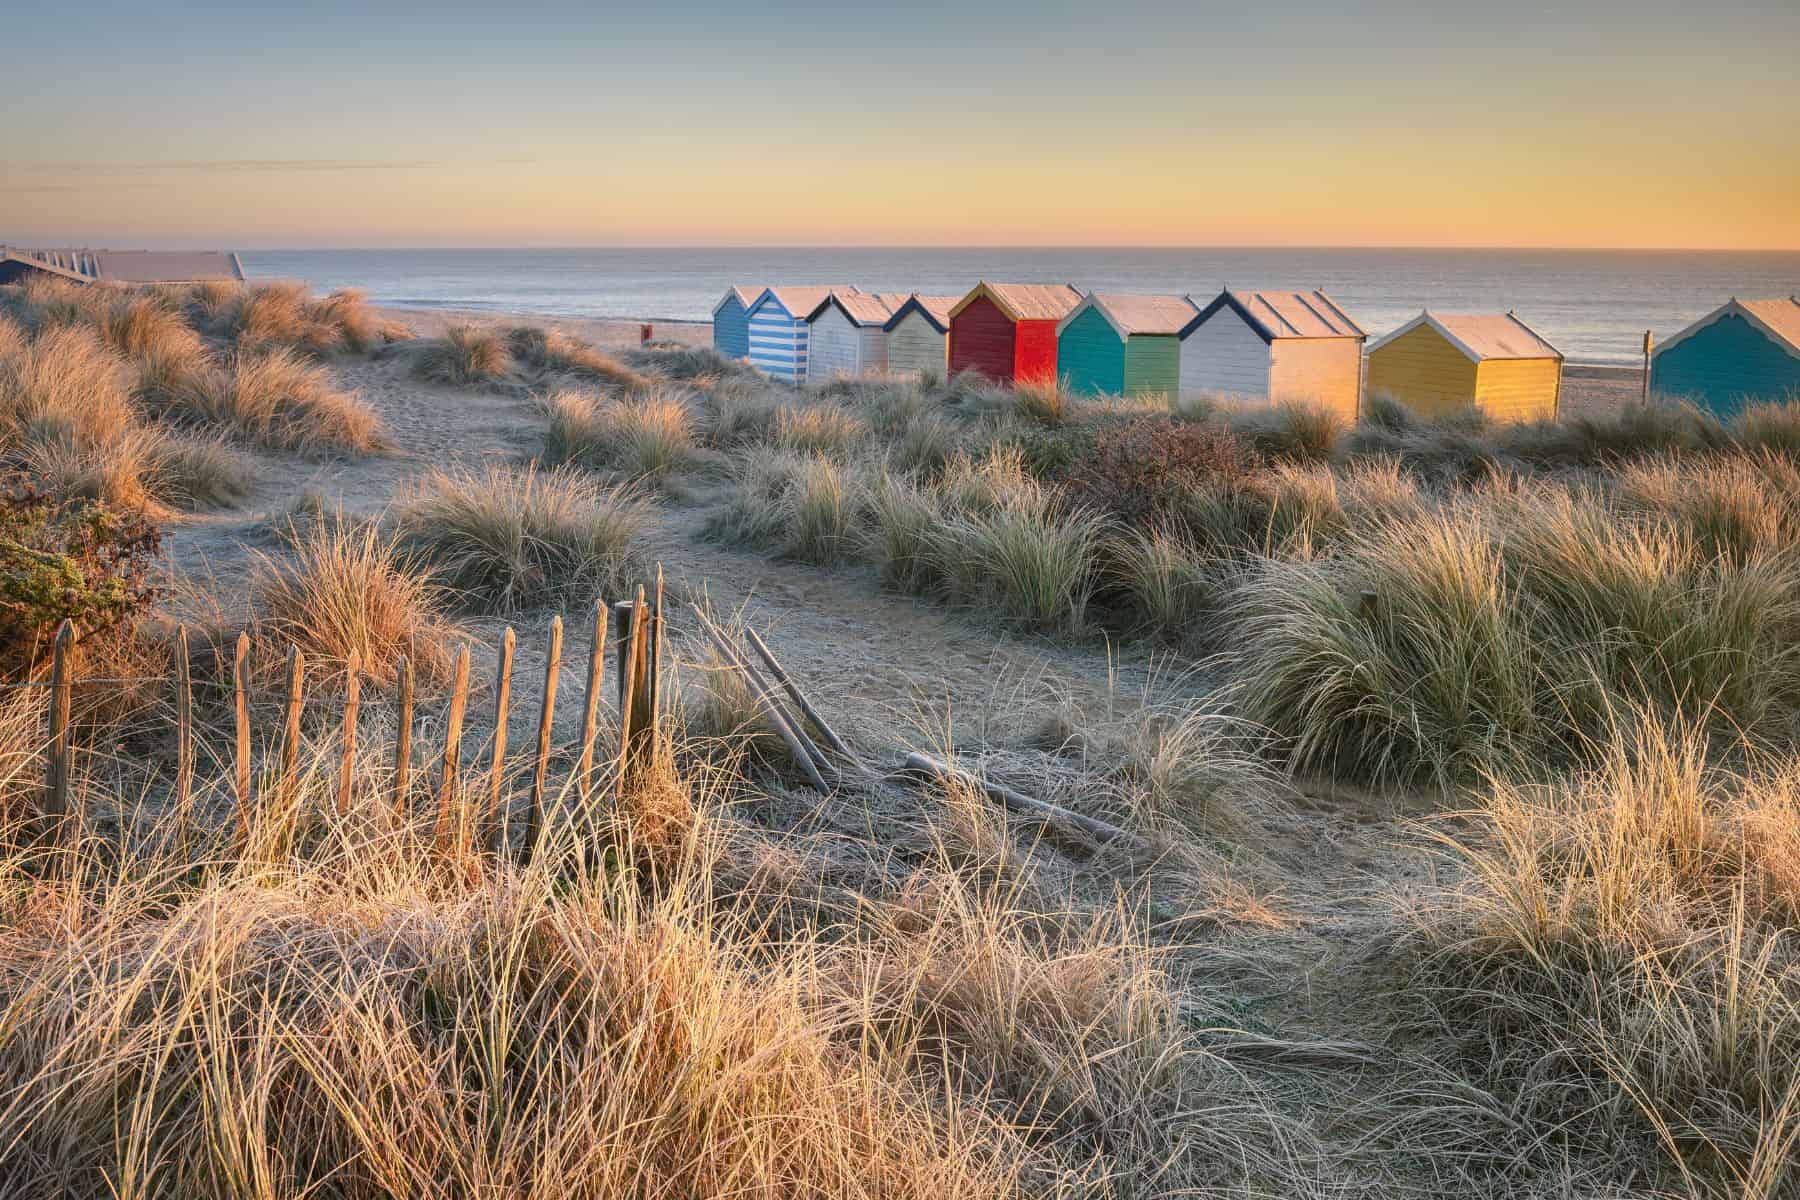 A row of beach houses on Southwold Beach, Suffolk